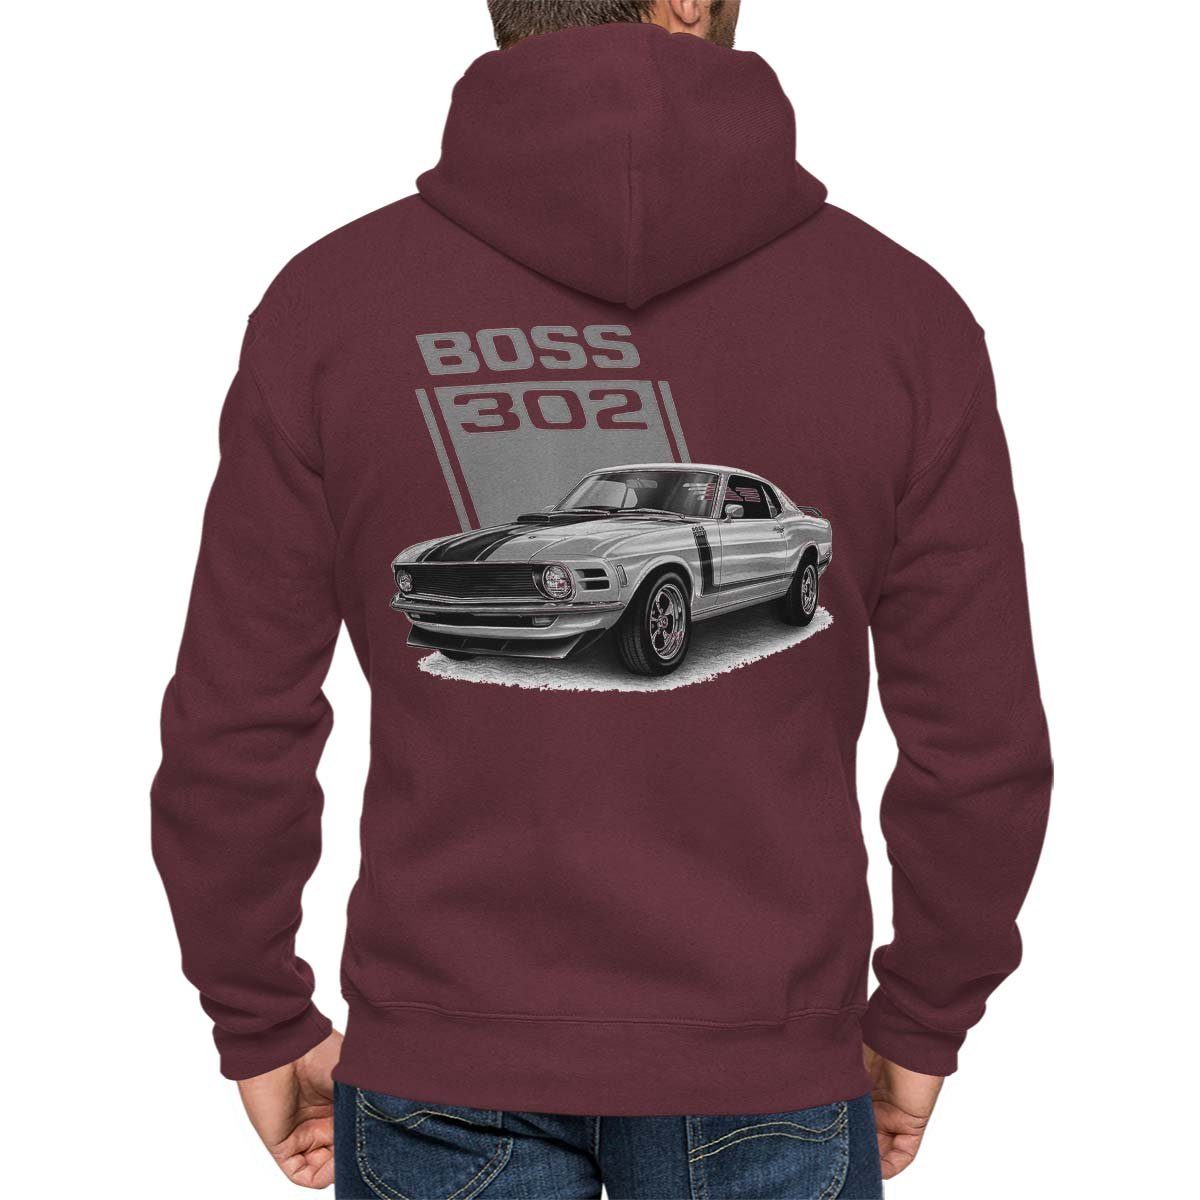 Rebel On Wheels Kapuzensweatjacke Kapuzenjacke Zip Hoodie Grey Muscle Car 302 mit Auto / US-Car Motiv Dunkel Rot